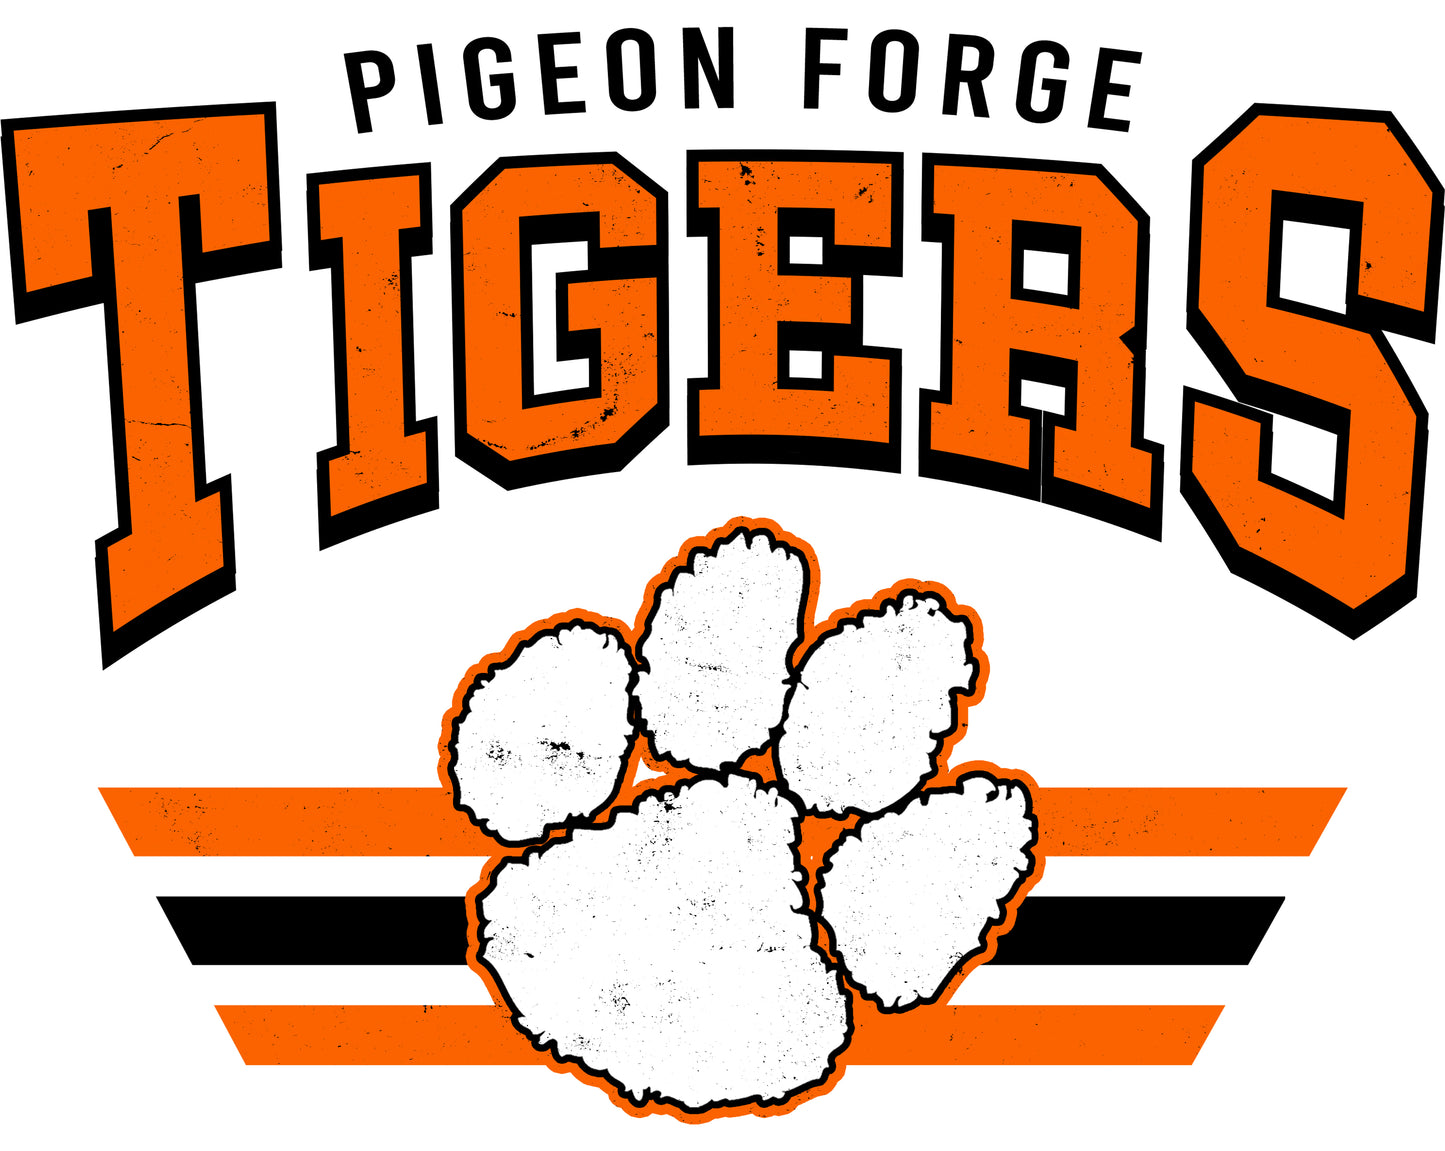 Pigeon Forge Tigers Retro